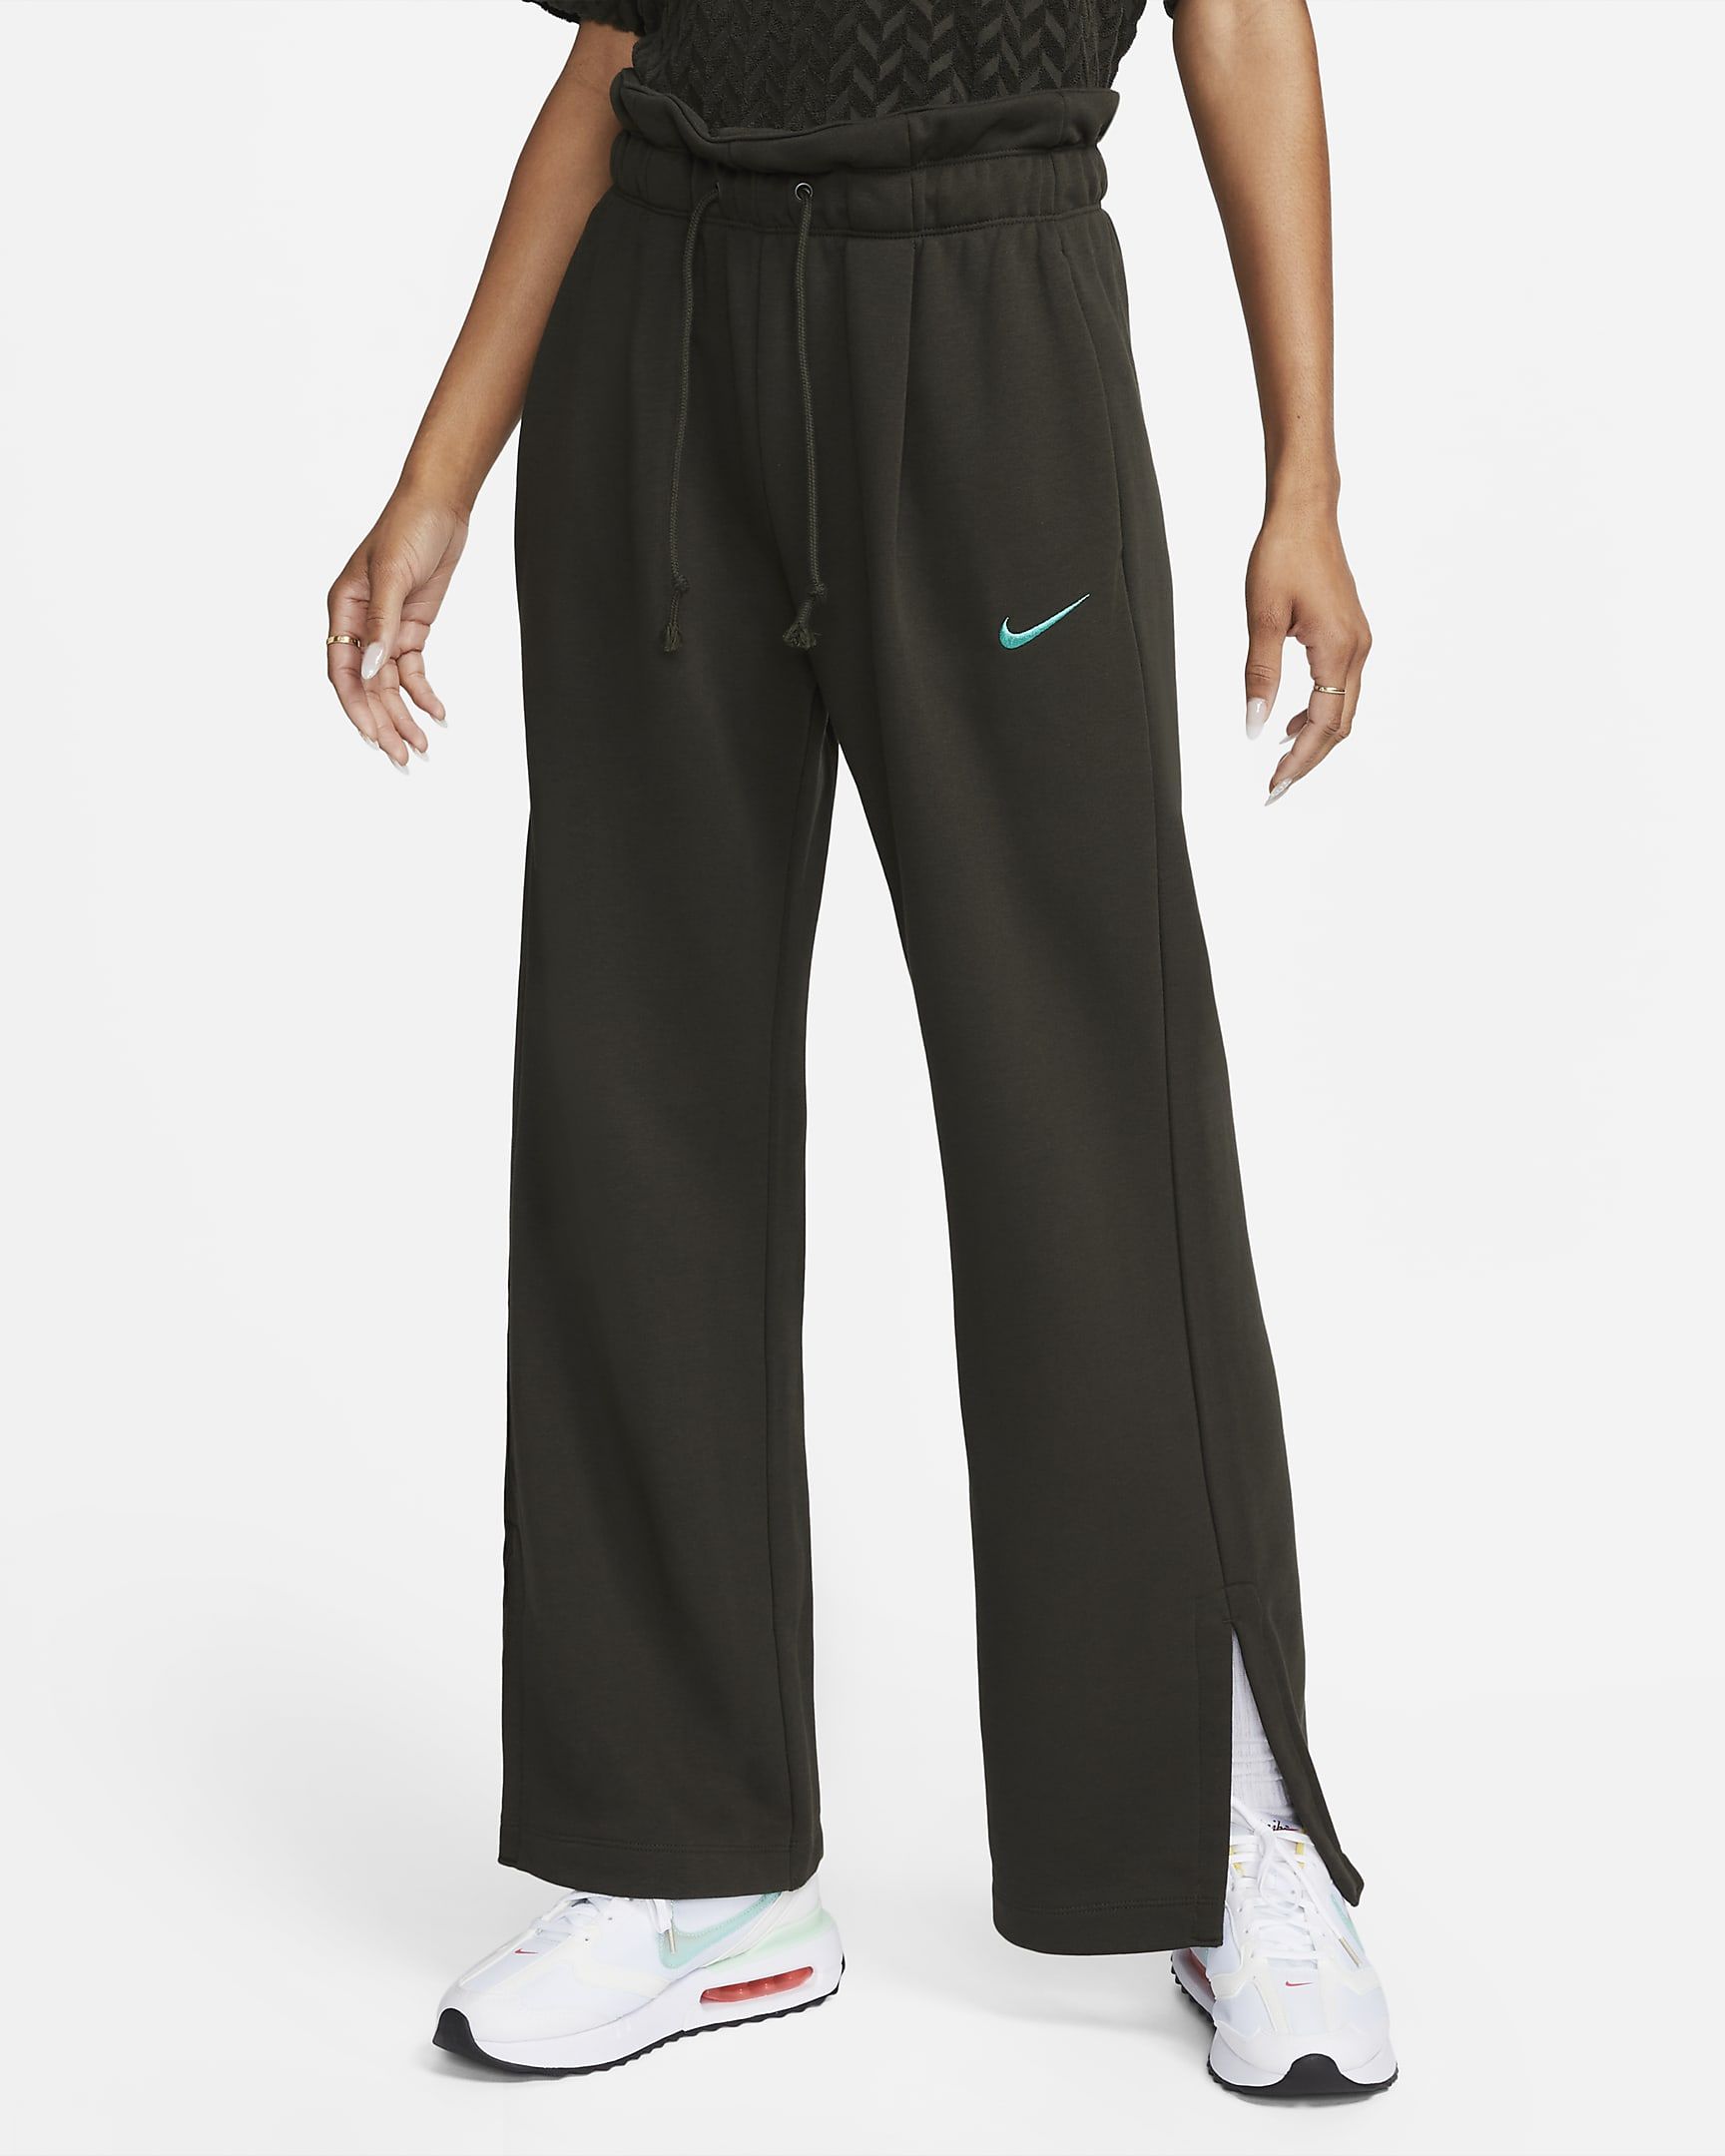 Nike Sportswear Everyday Modern Women's High-Waisted Fleece Open-Hem Pants. Nike.com | Nike (US)